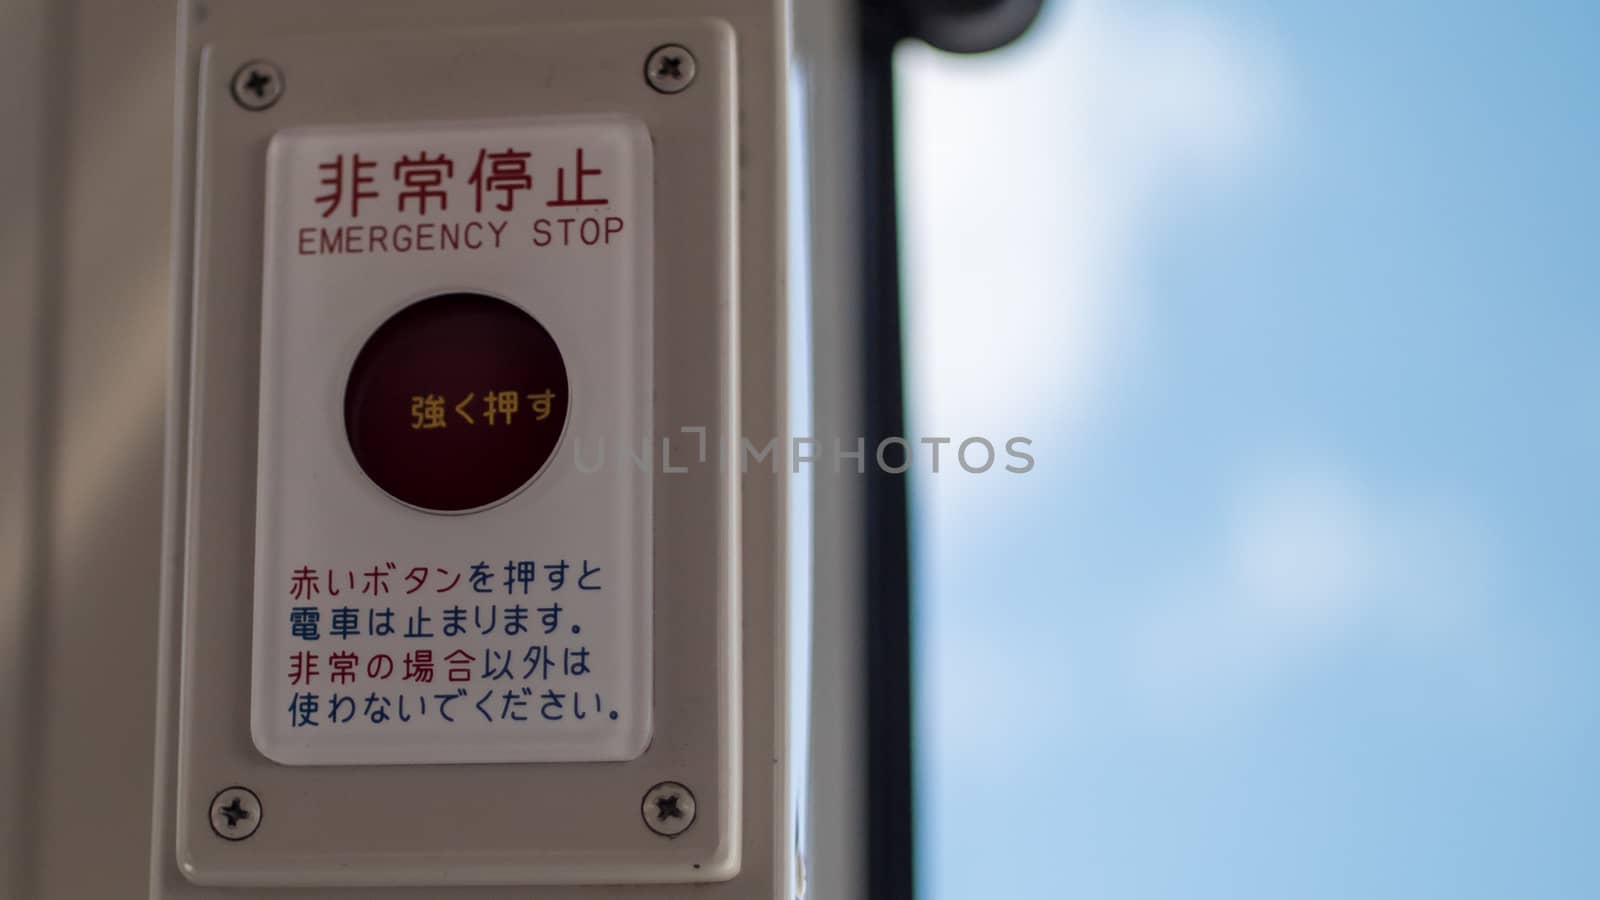 Japanese train Emergency stop button, Kansai, Japan